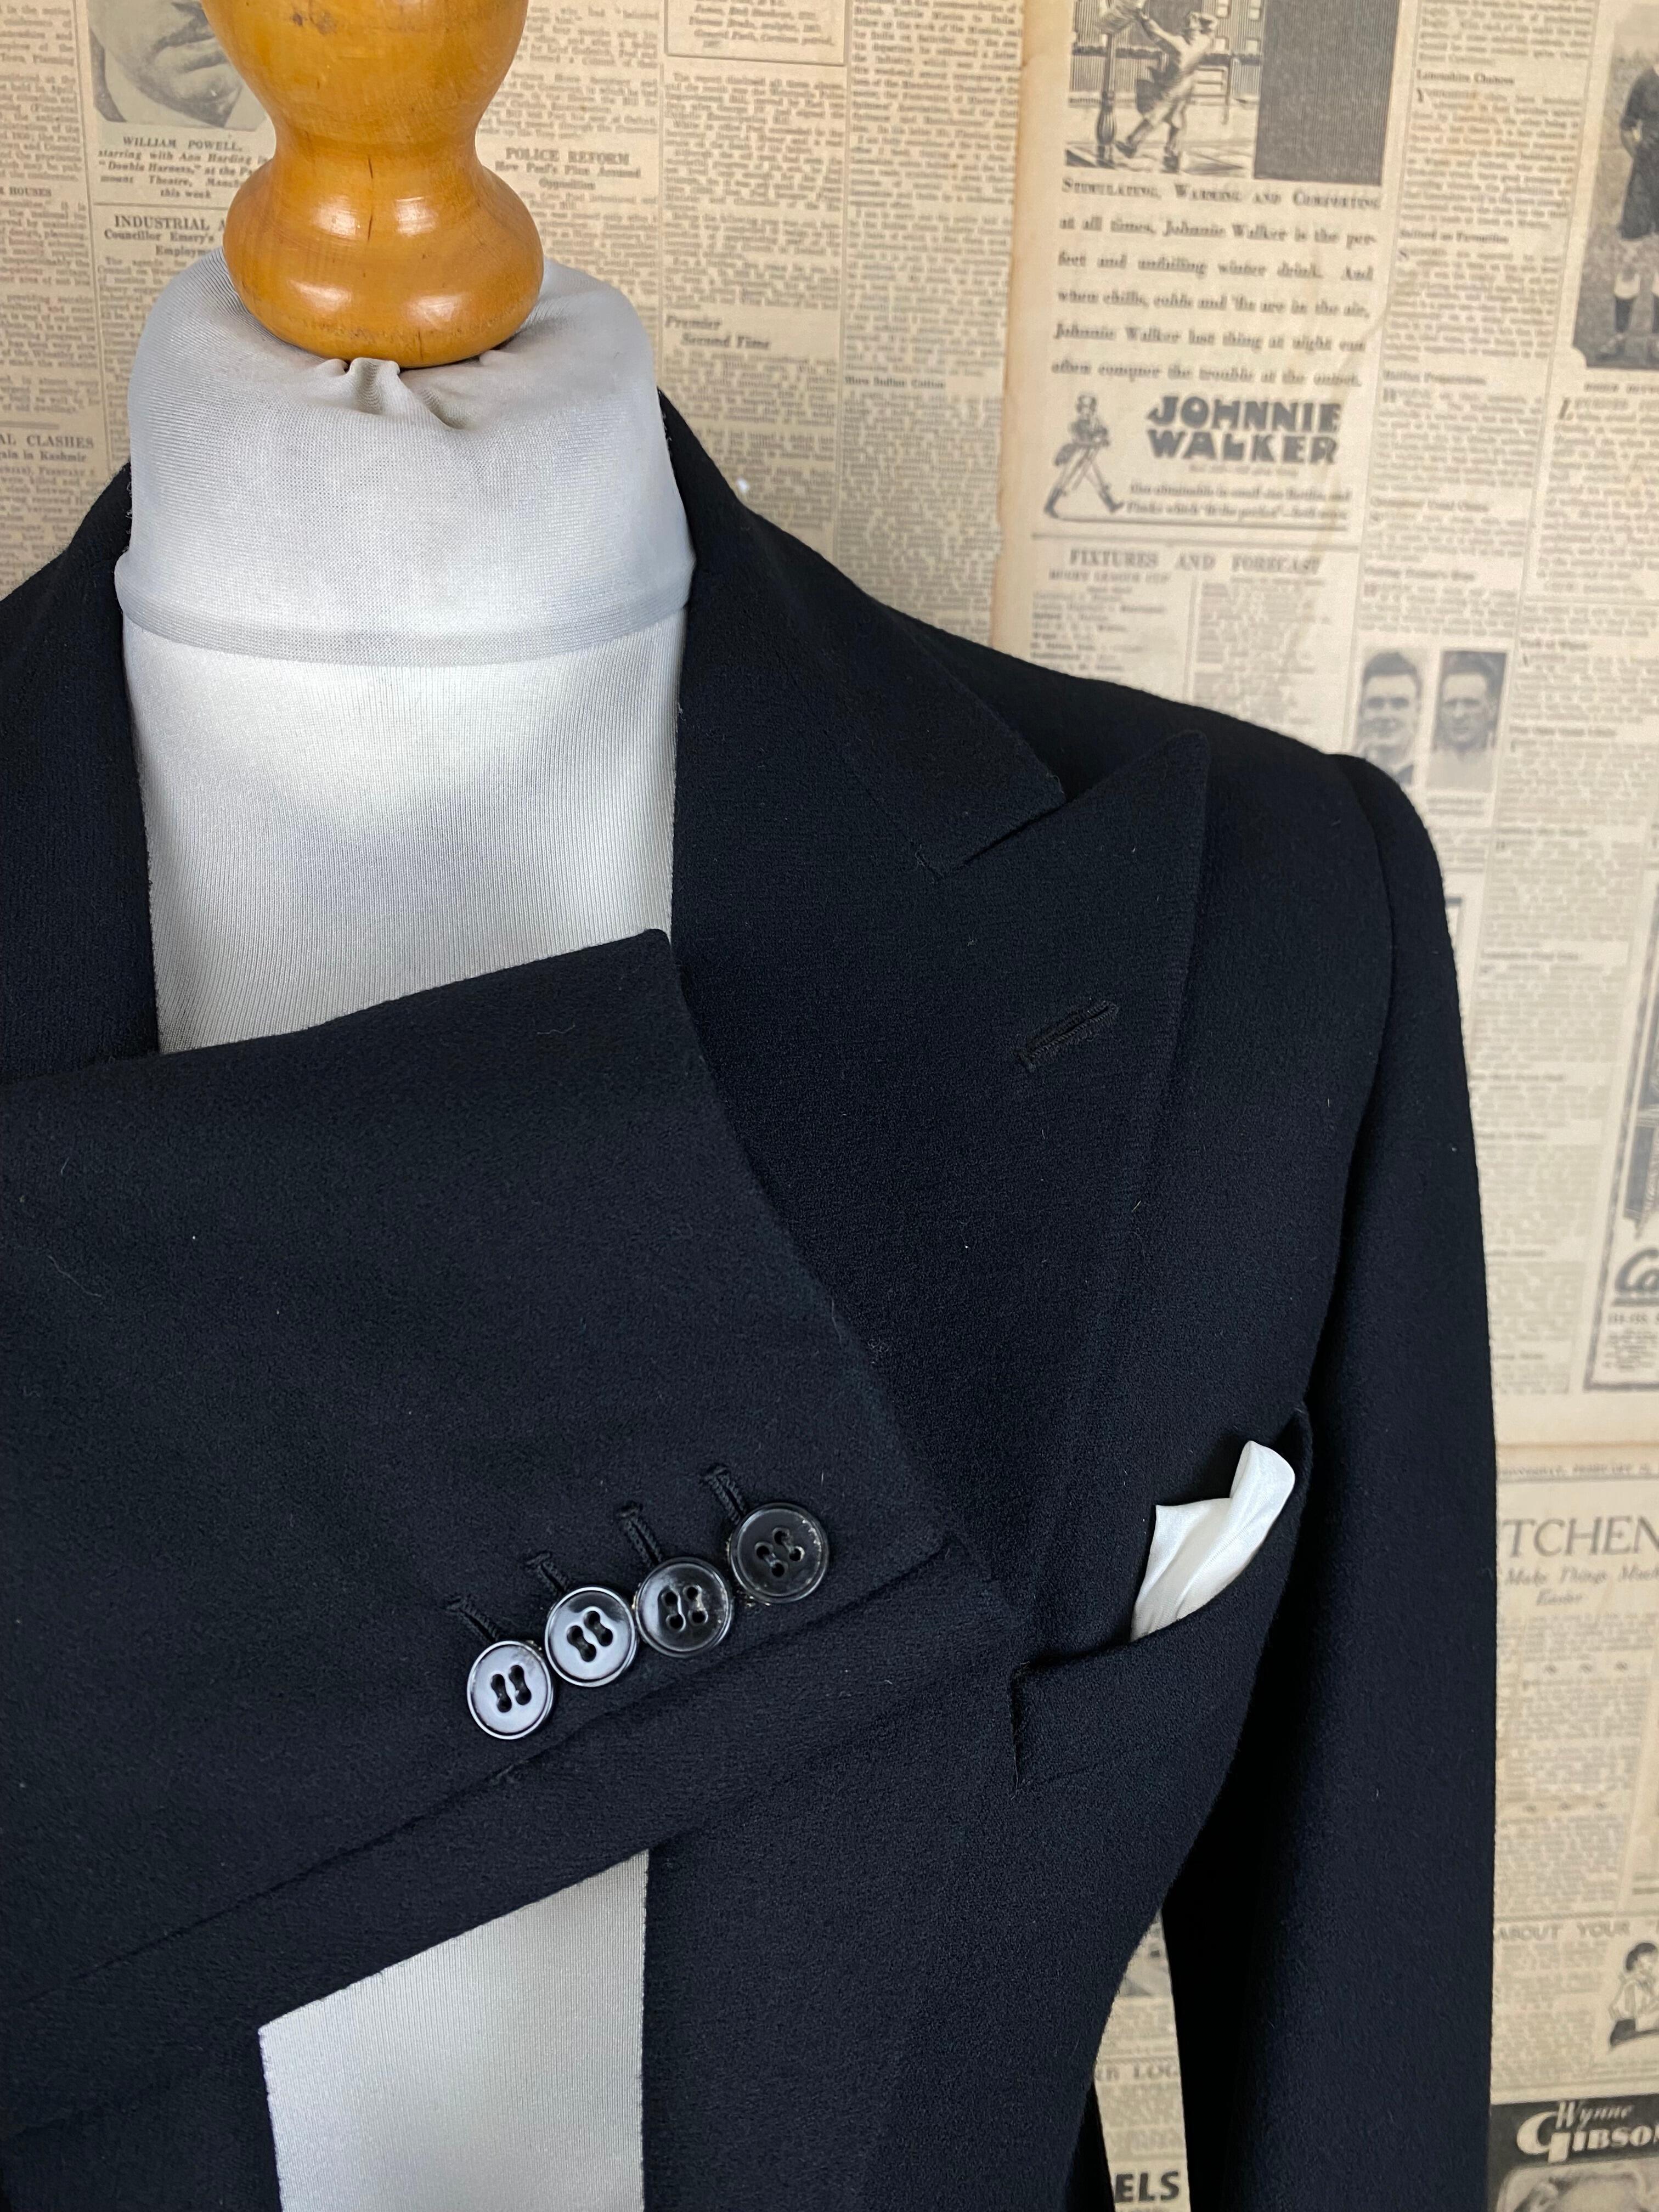 173> Vintage 1930's morning tailcoat size 38